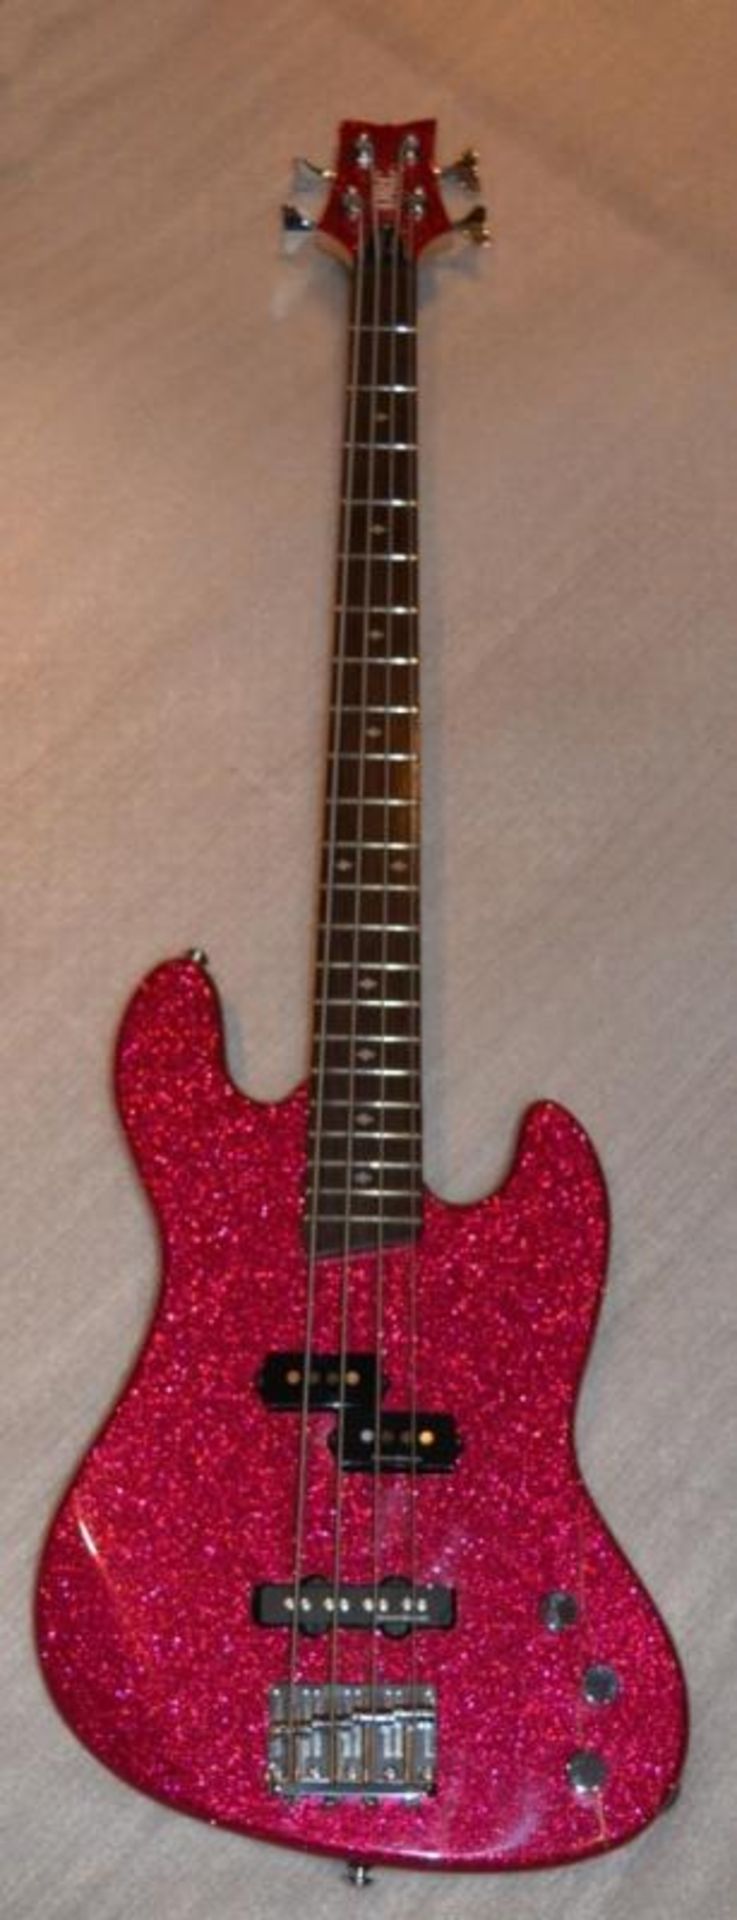 1 x Daisy Rebel Rockit Supernova Bass Guitar - Atomic Pink - 34" Scale - 22 Frets - Duncan